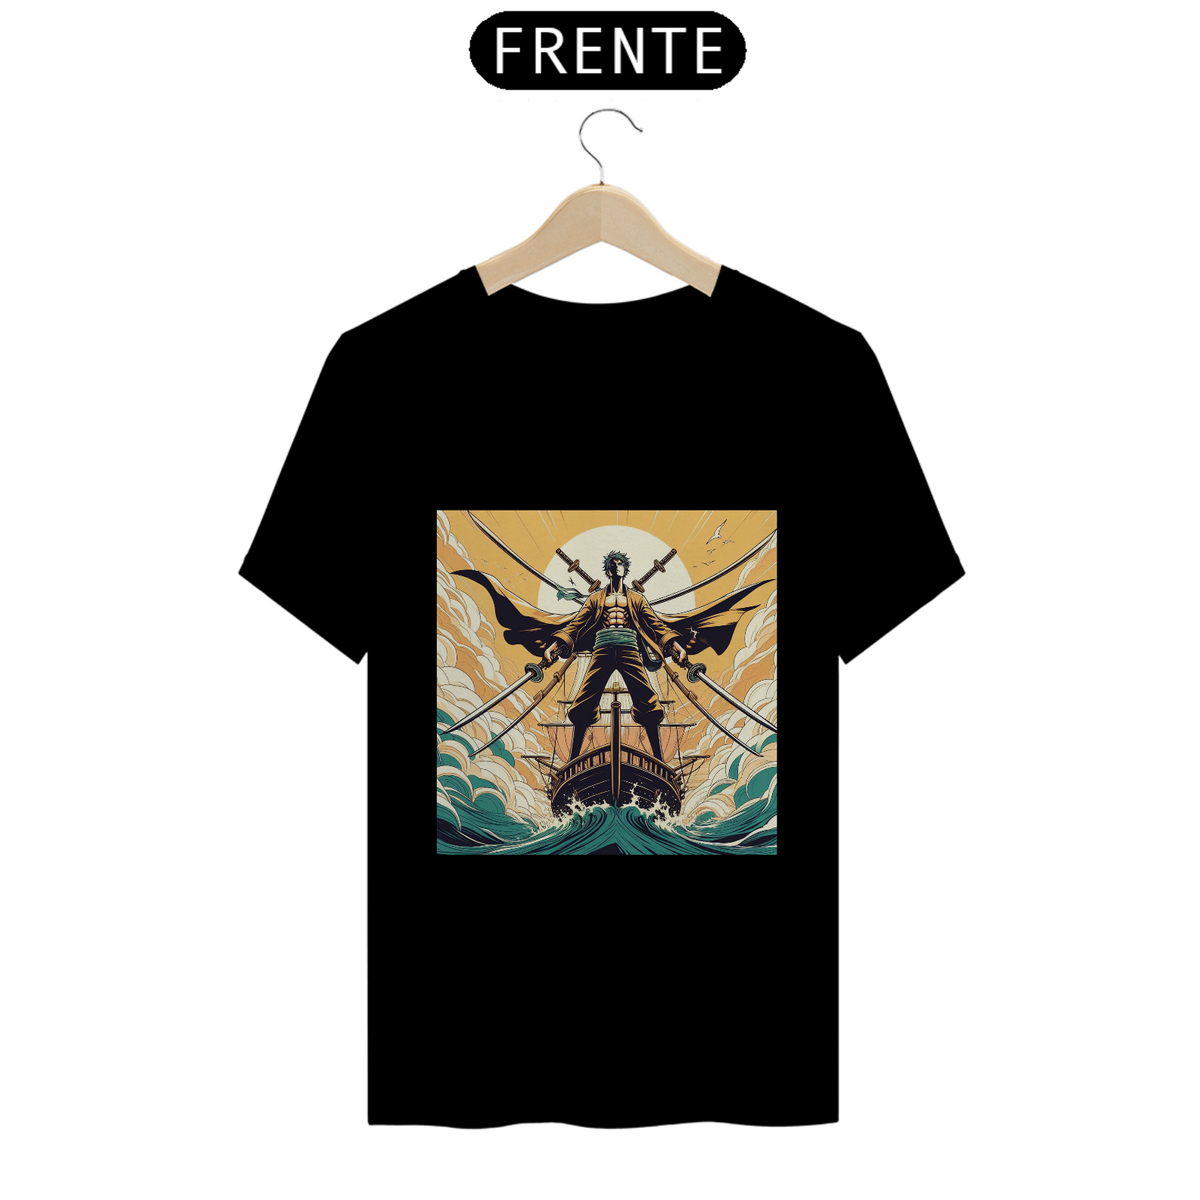 Nome do produto: T-Shirt Roronoa Zoro (One Piece)